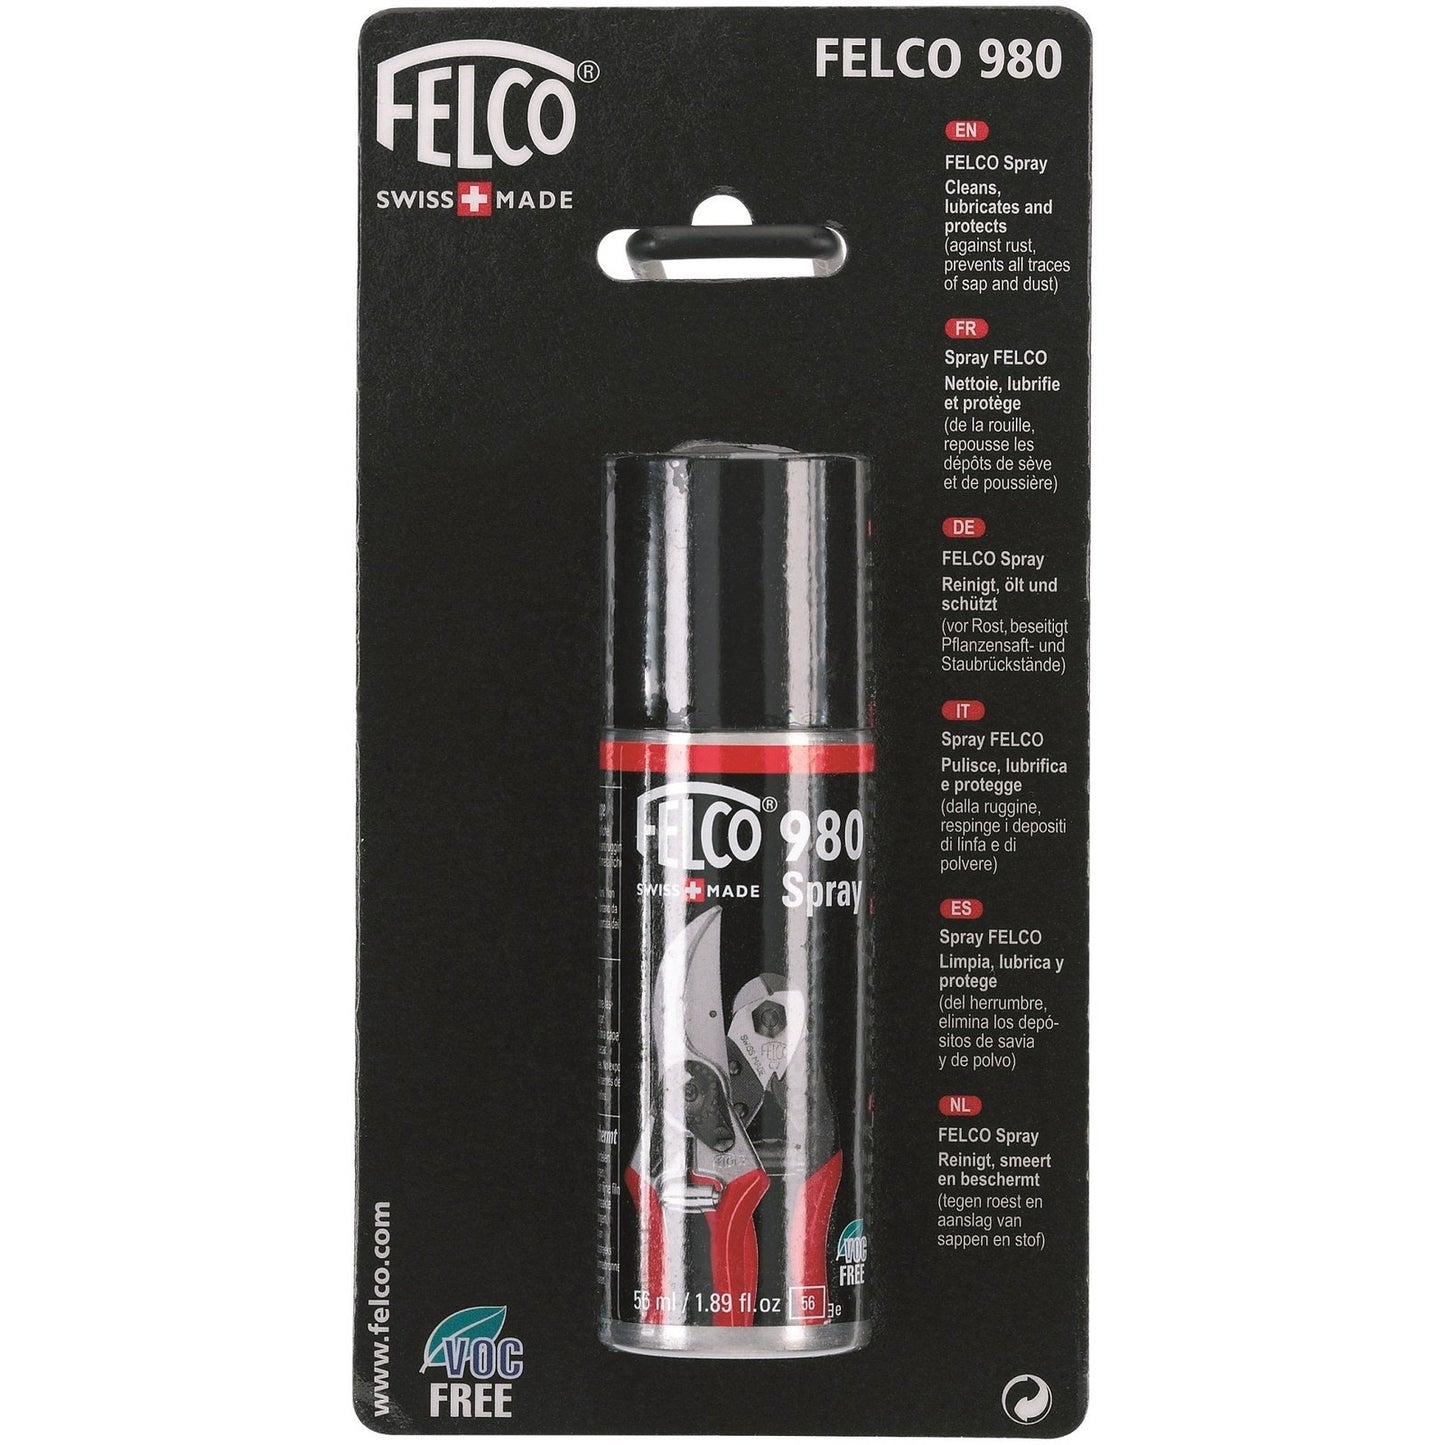 Felco 980 Maintenance Product Spray